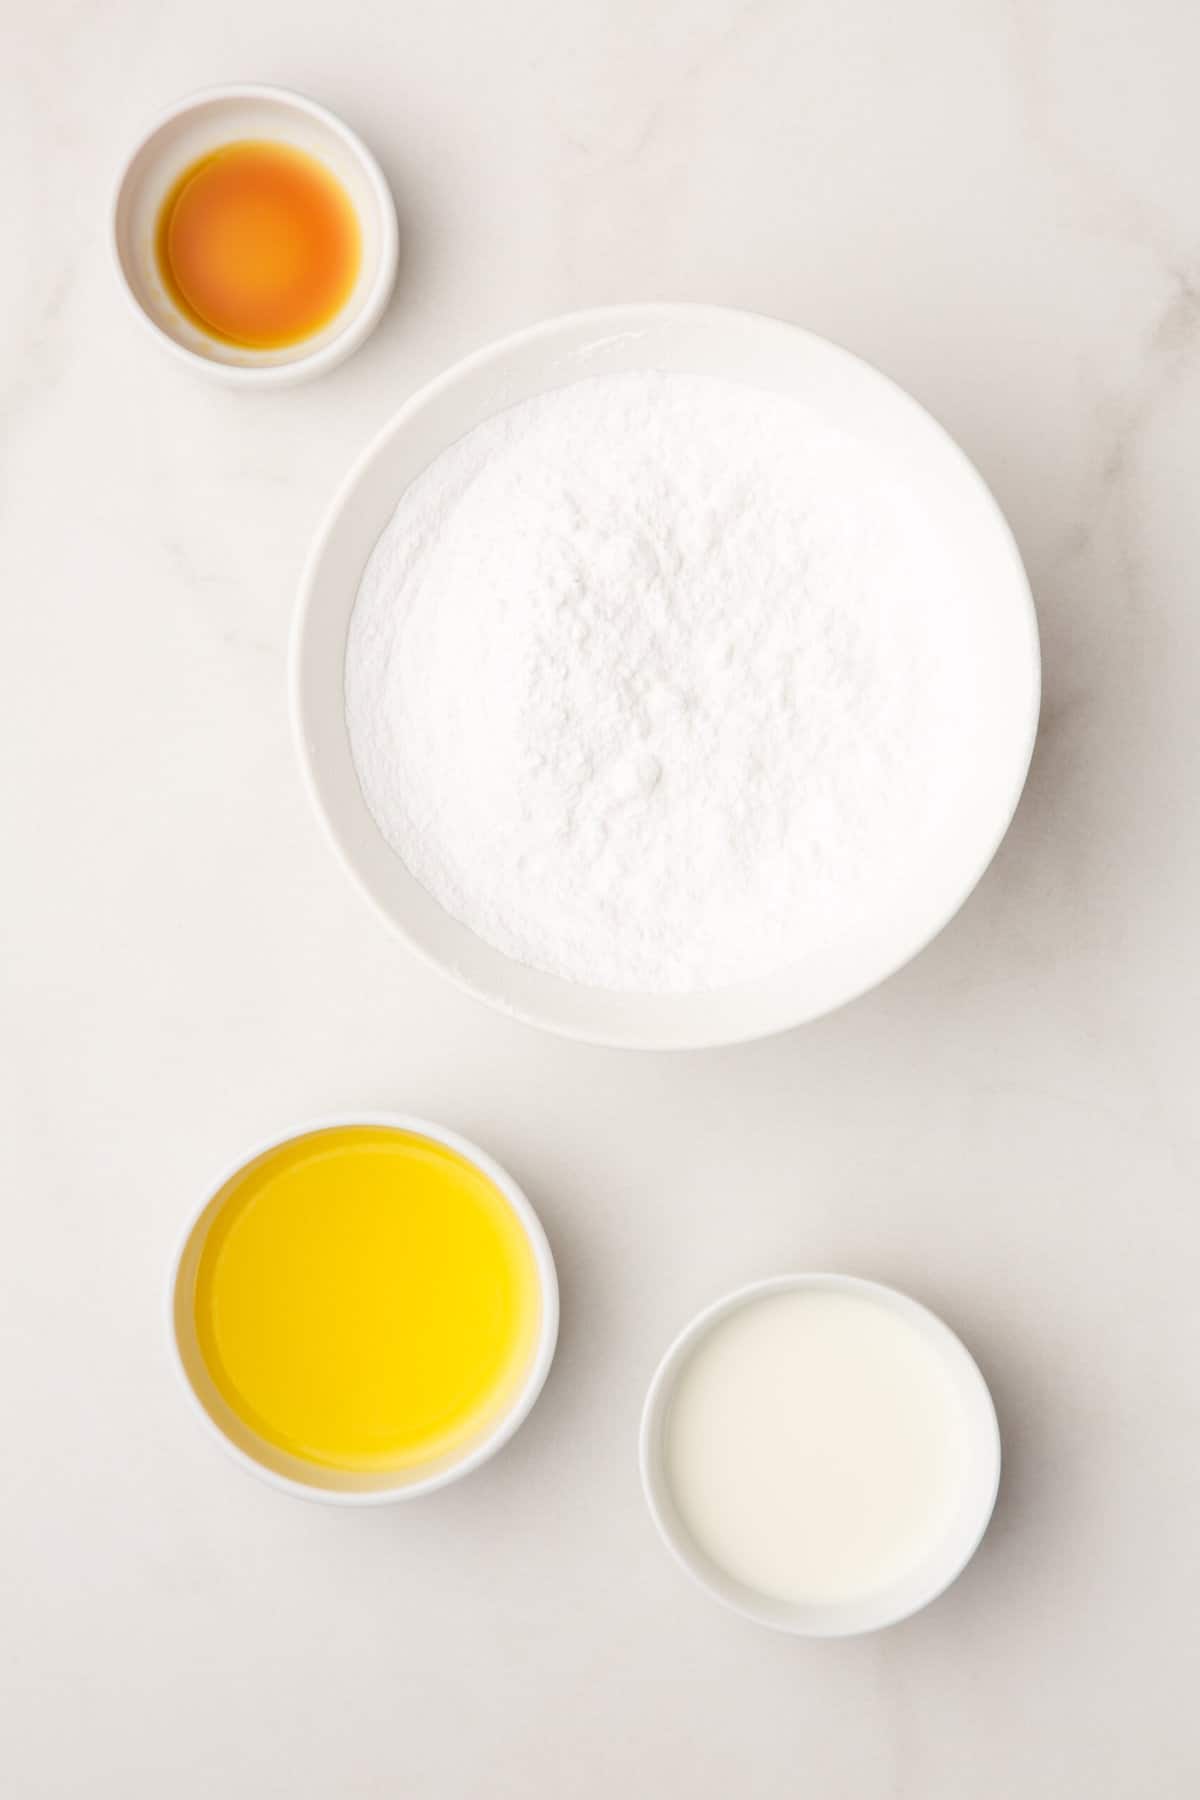 ingredients to make vanilla glaze